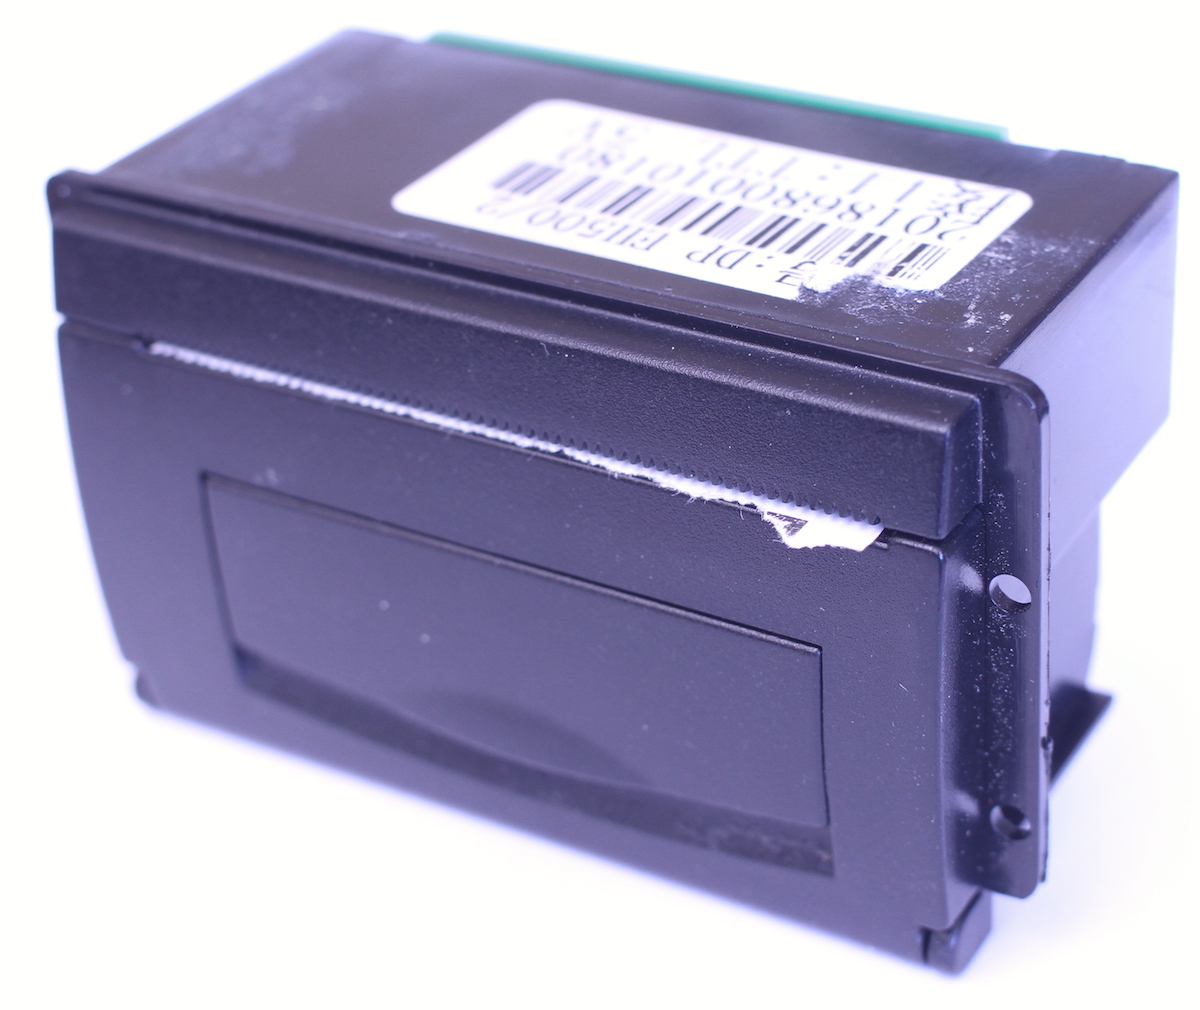 Nano printer from Adafruit